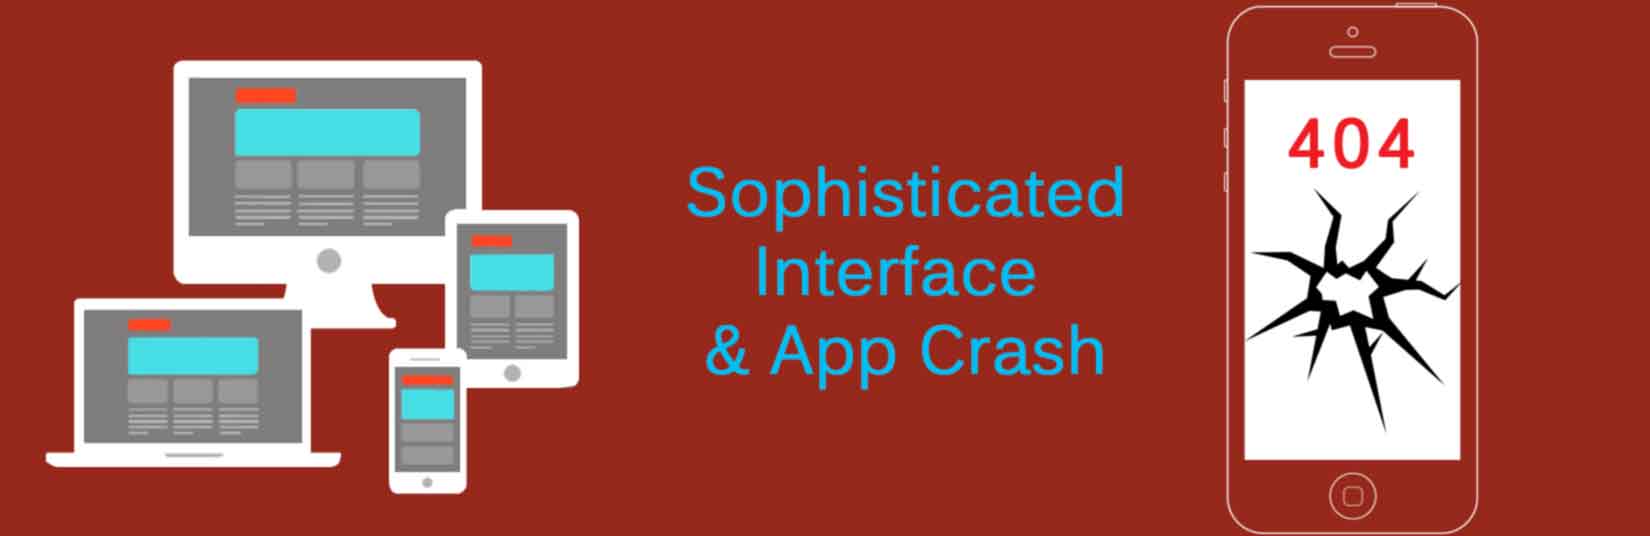 idisplay app crash